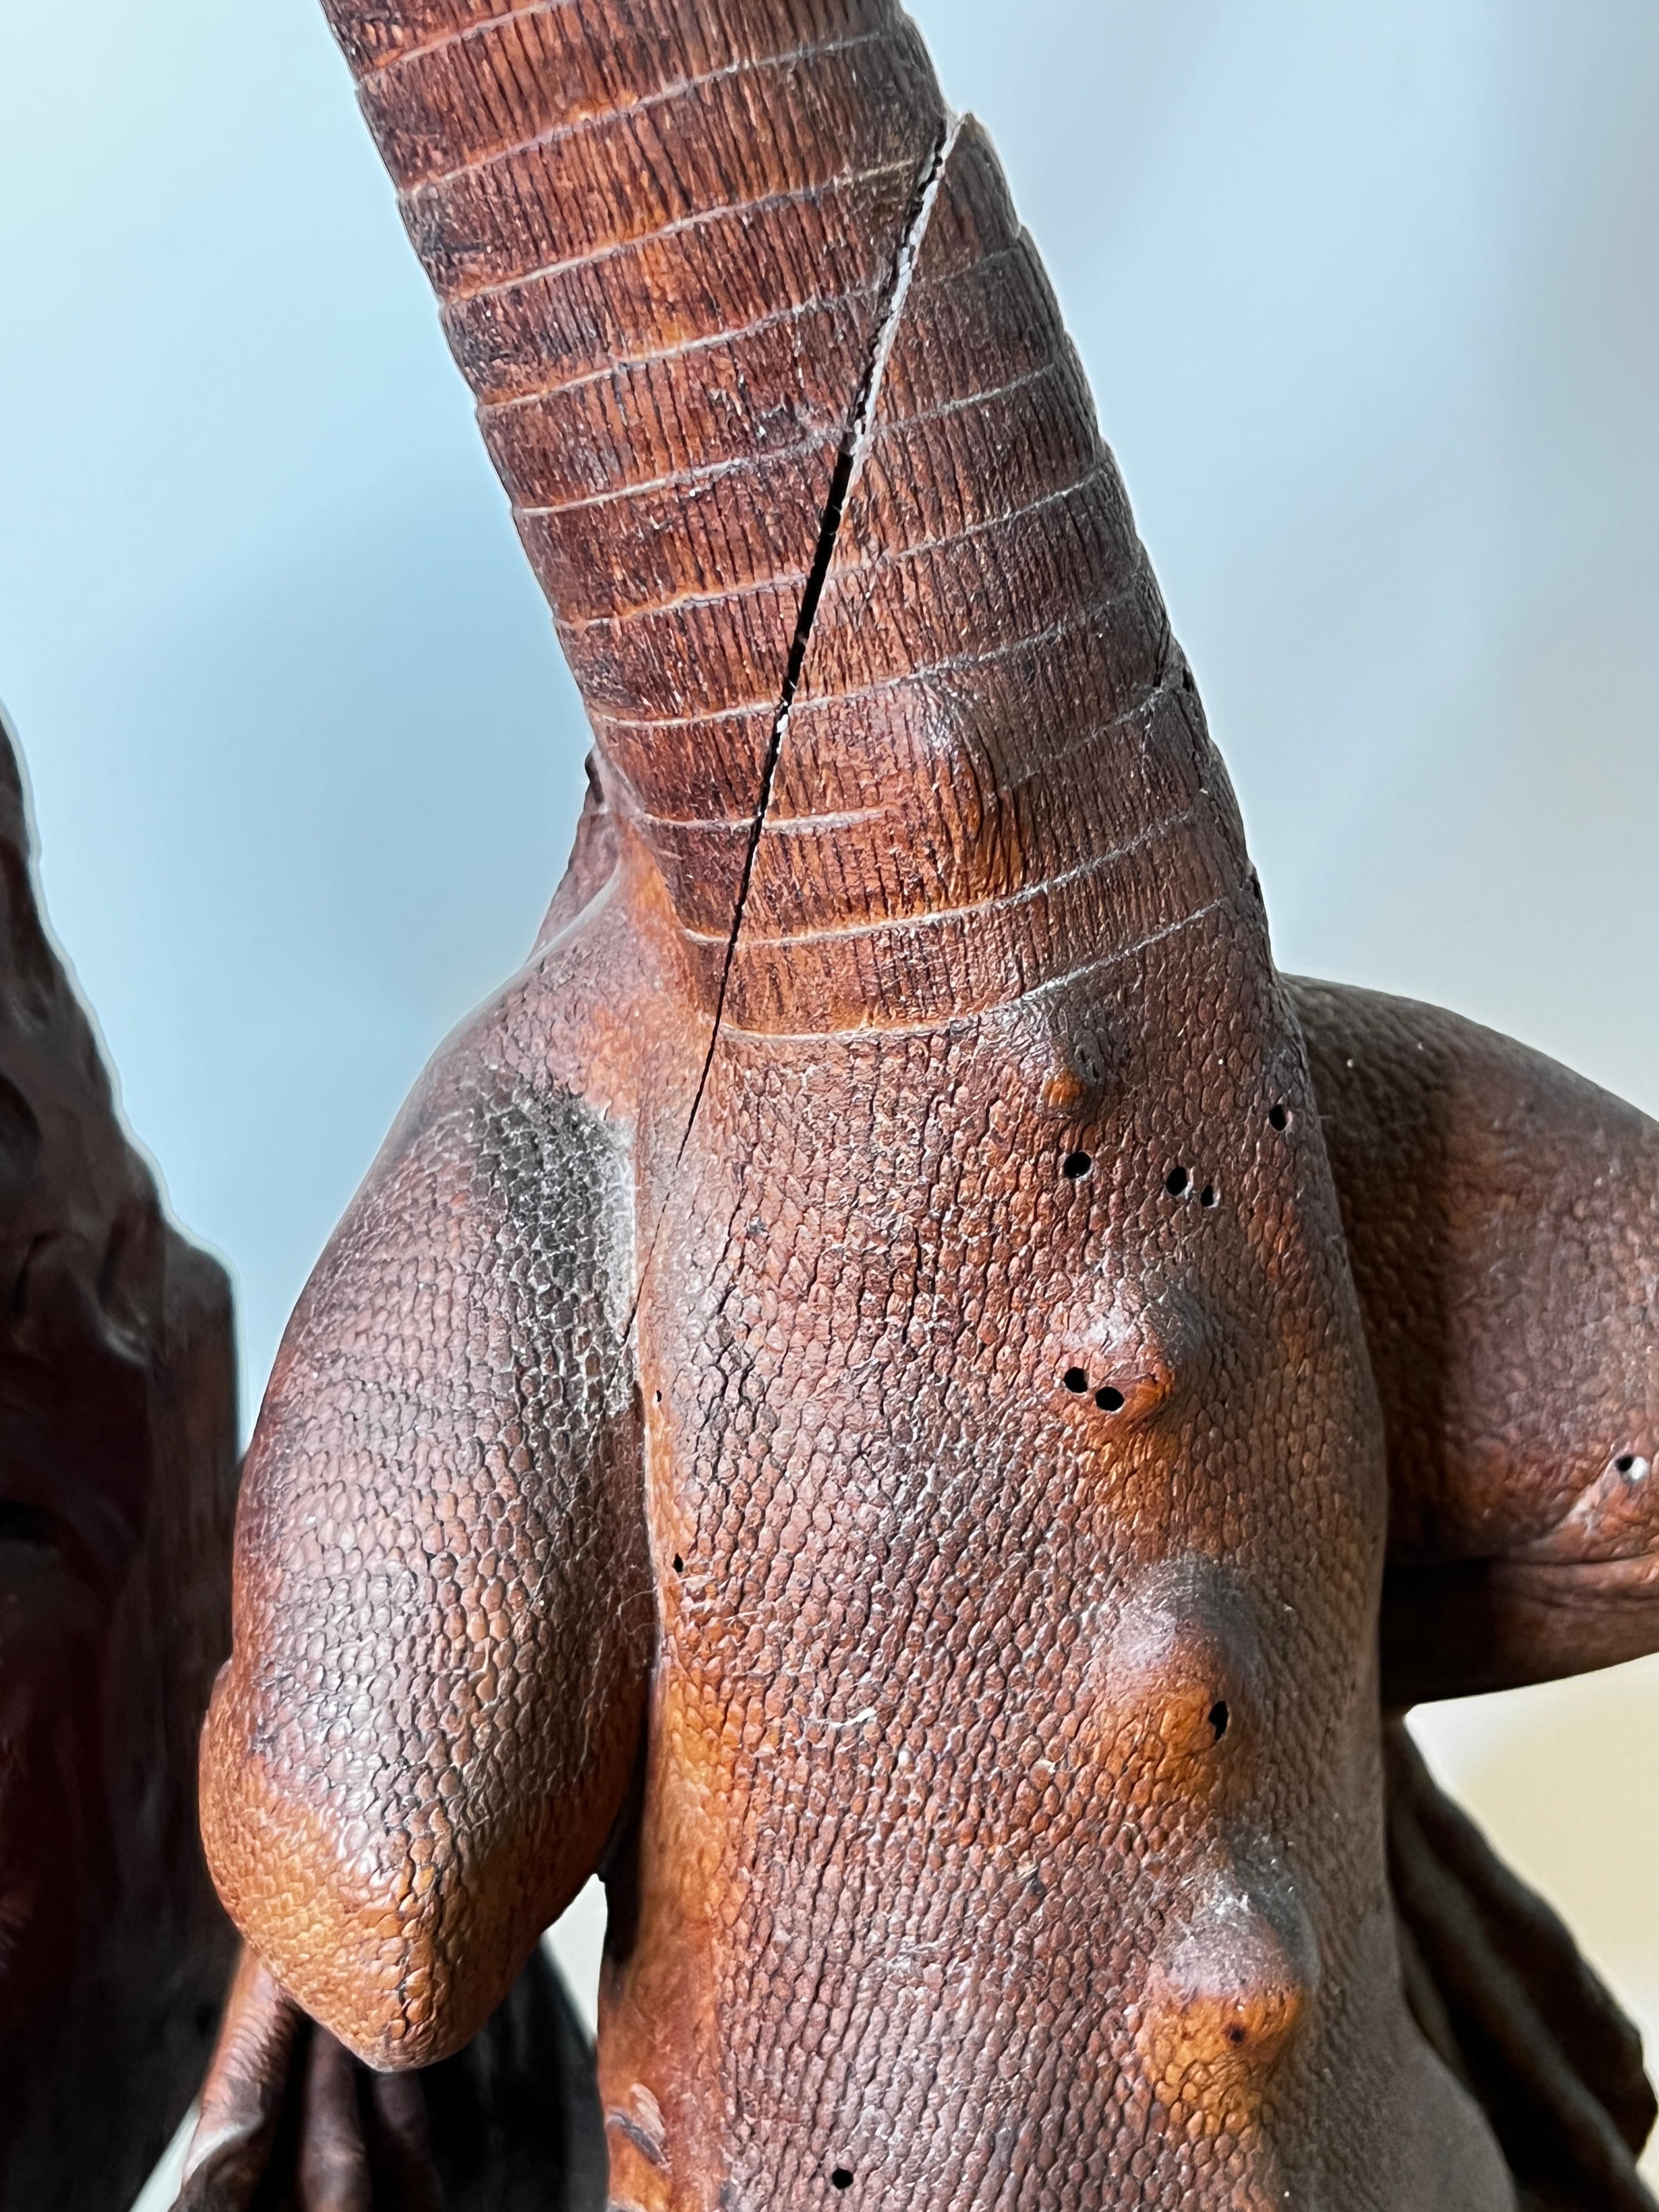 Carved Wooden Iguana Lizard Sculptures 9